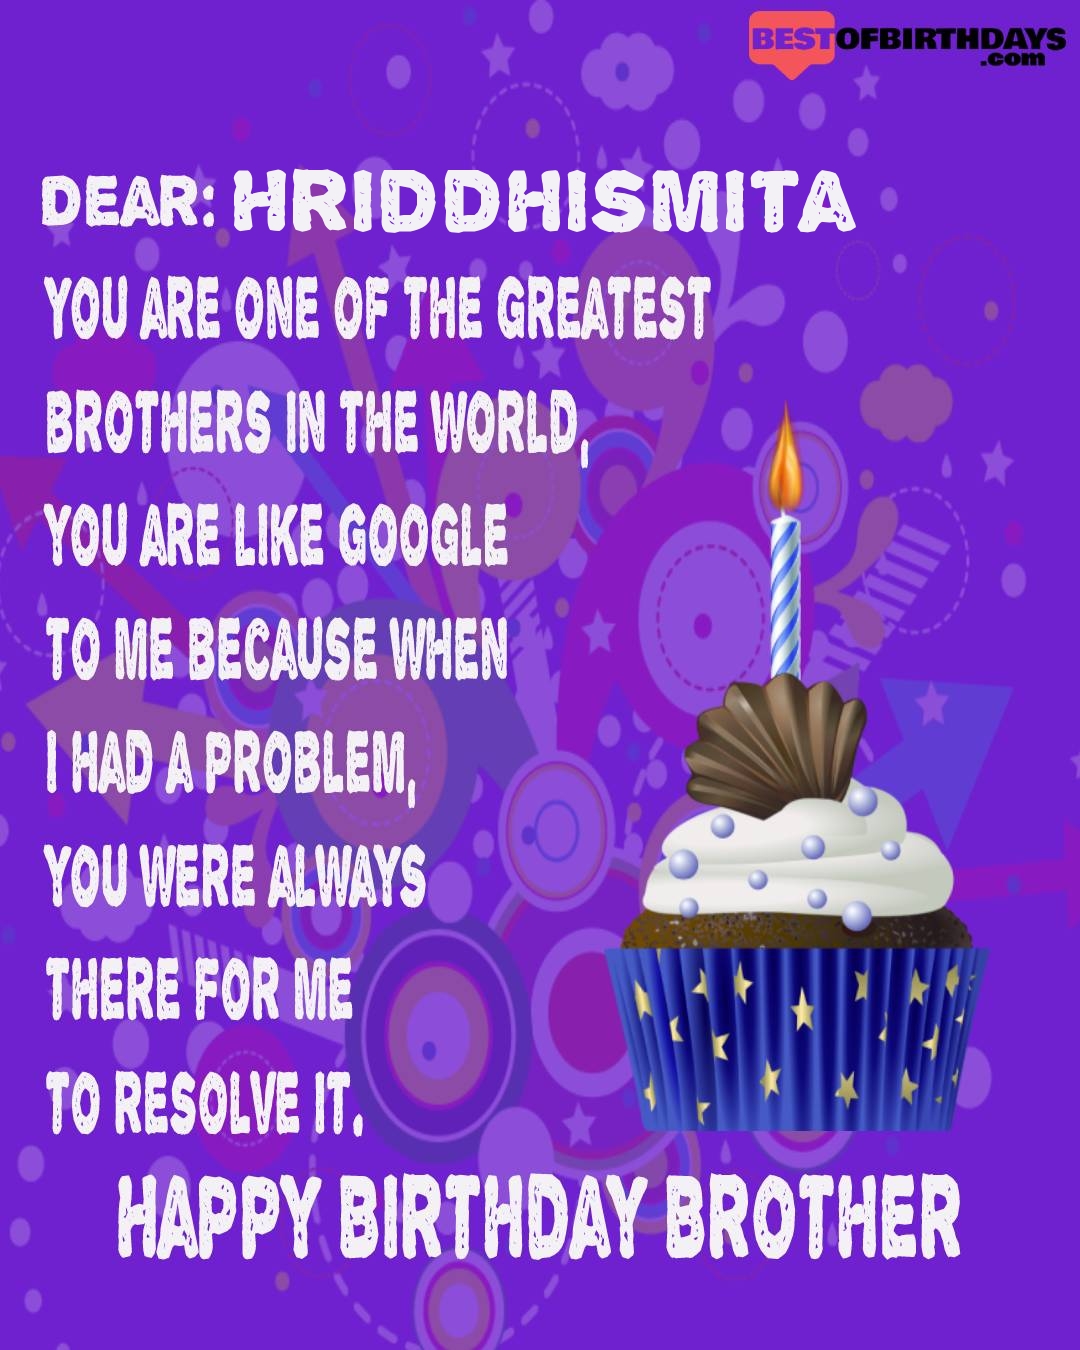 Happy birthday hriddhismita bhai brother bro